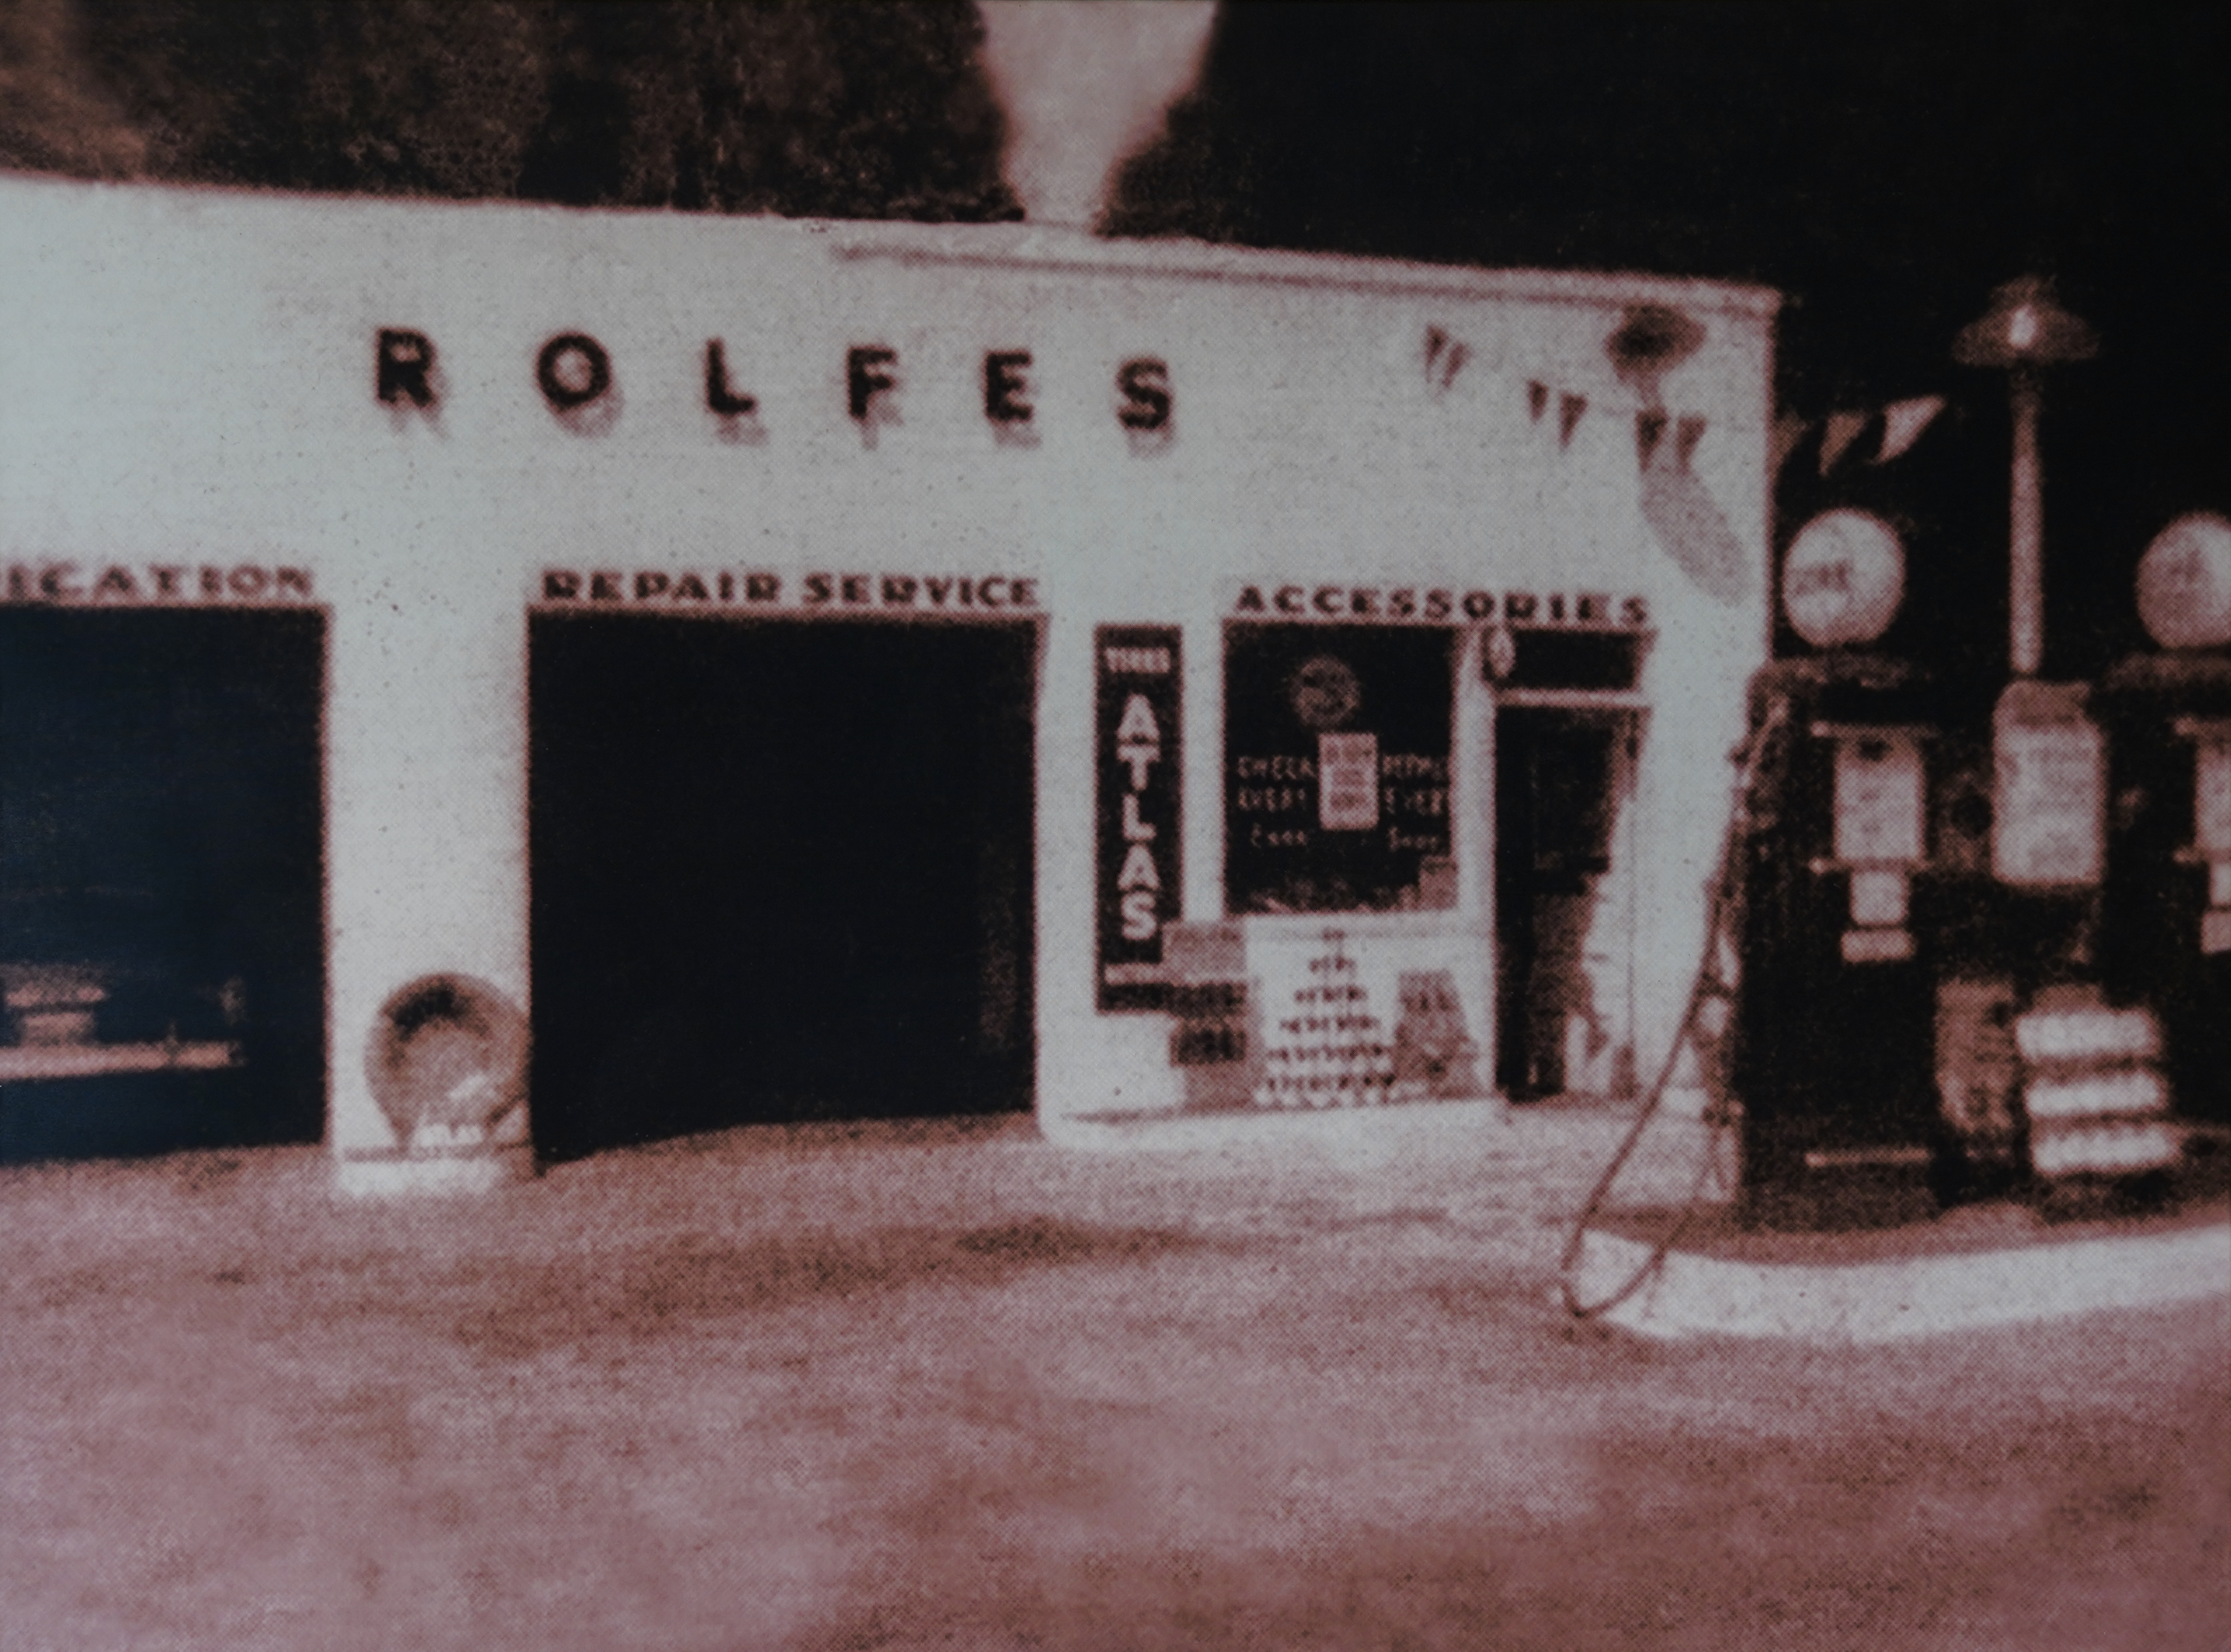 Rolfes Service Station